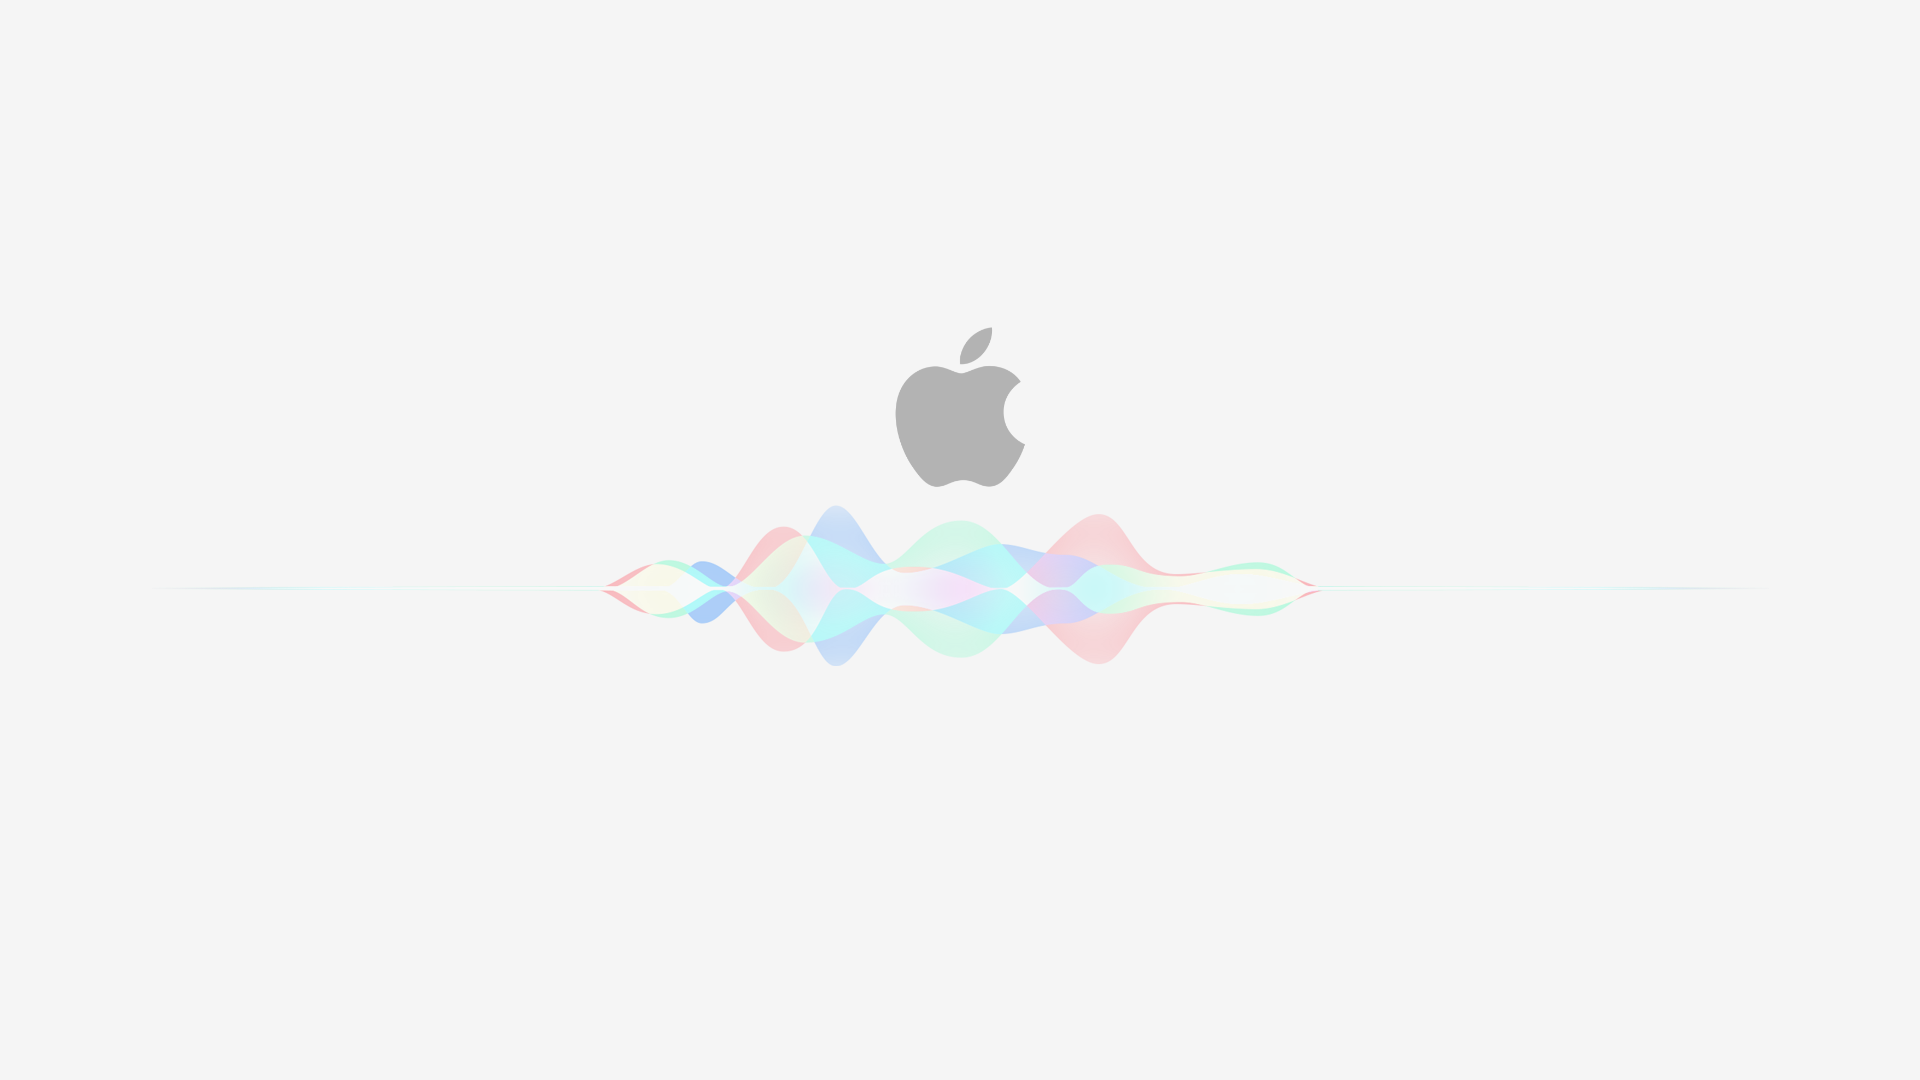 General 1920x1080 Apple Inc. minimalism logo white background brand simple background